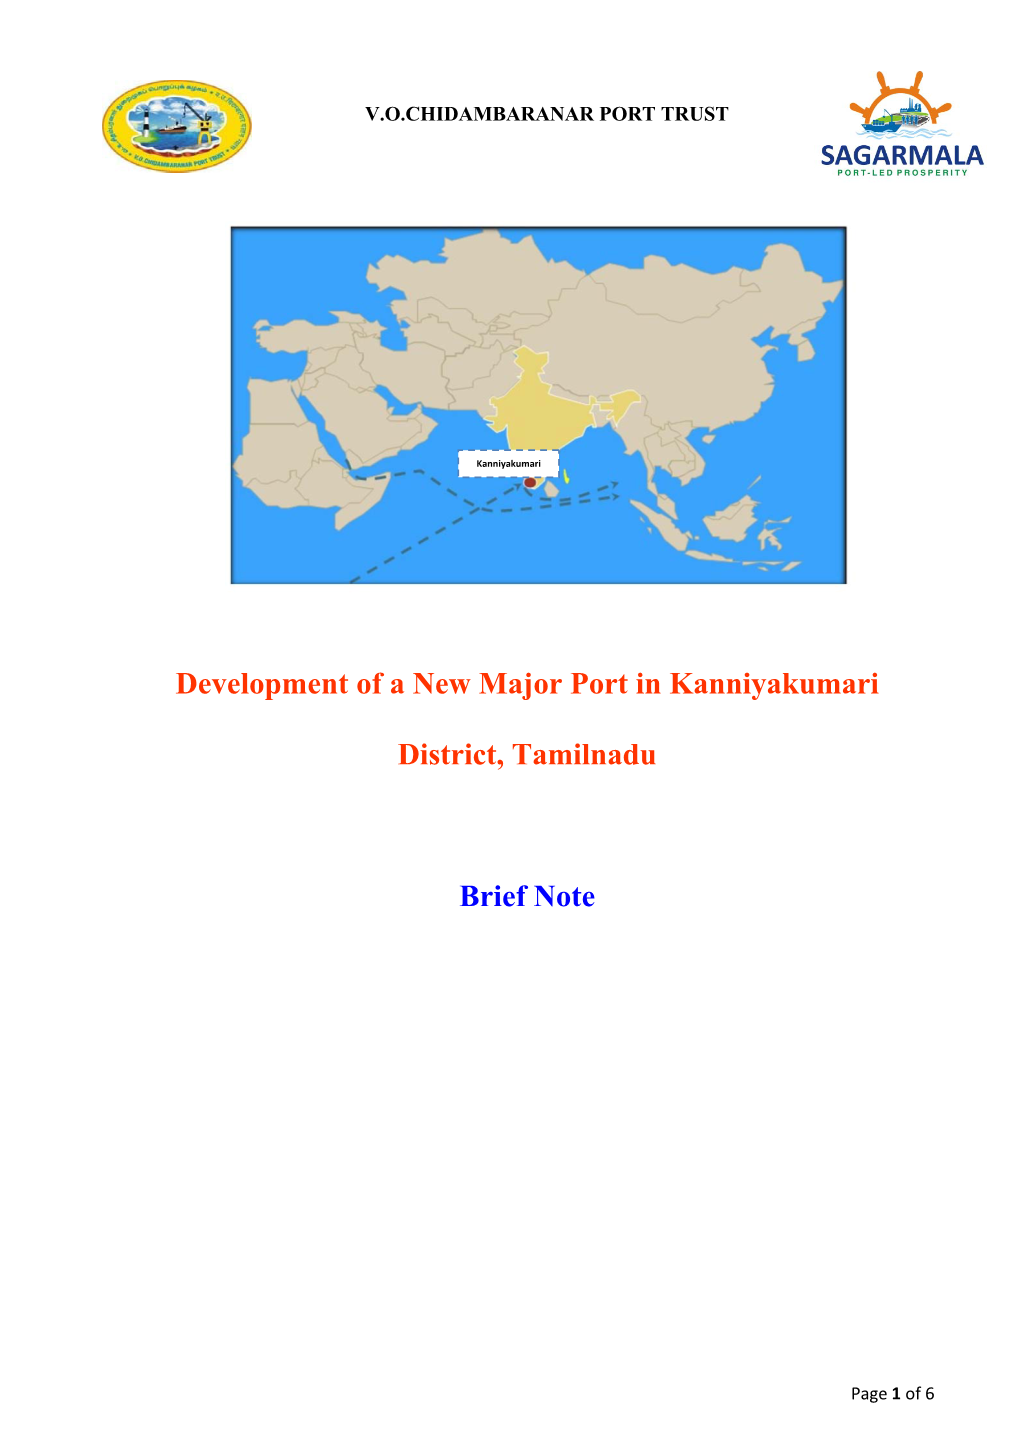 Development of a New Major Port in Kanniyakumari District, Tamilnadu